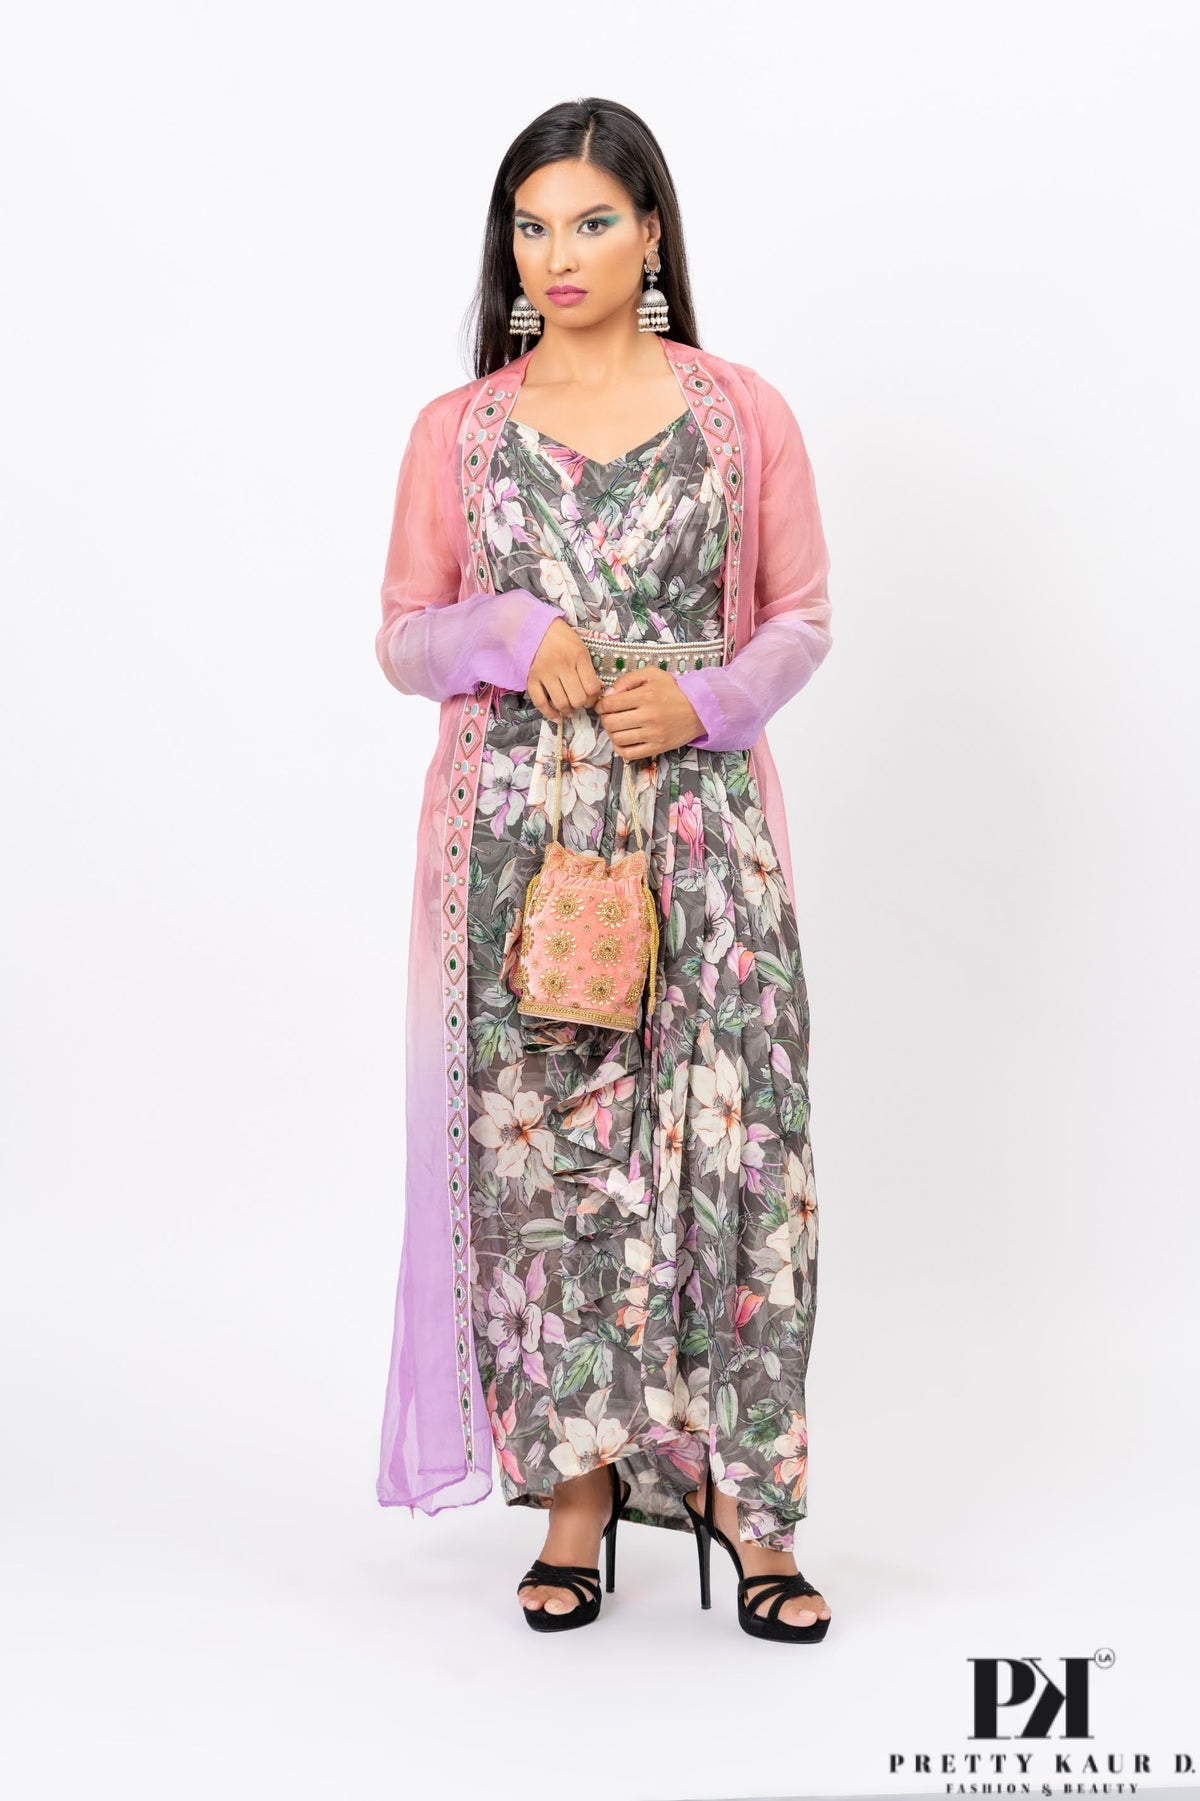 Pretty-Kaur-fashion-beauty-Dress-with-Full-Length-Pink-Jacket-1